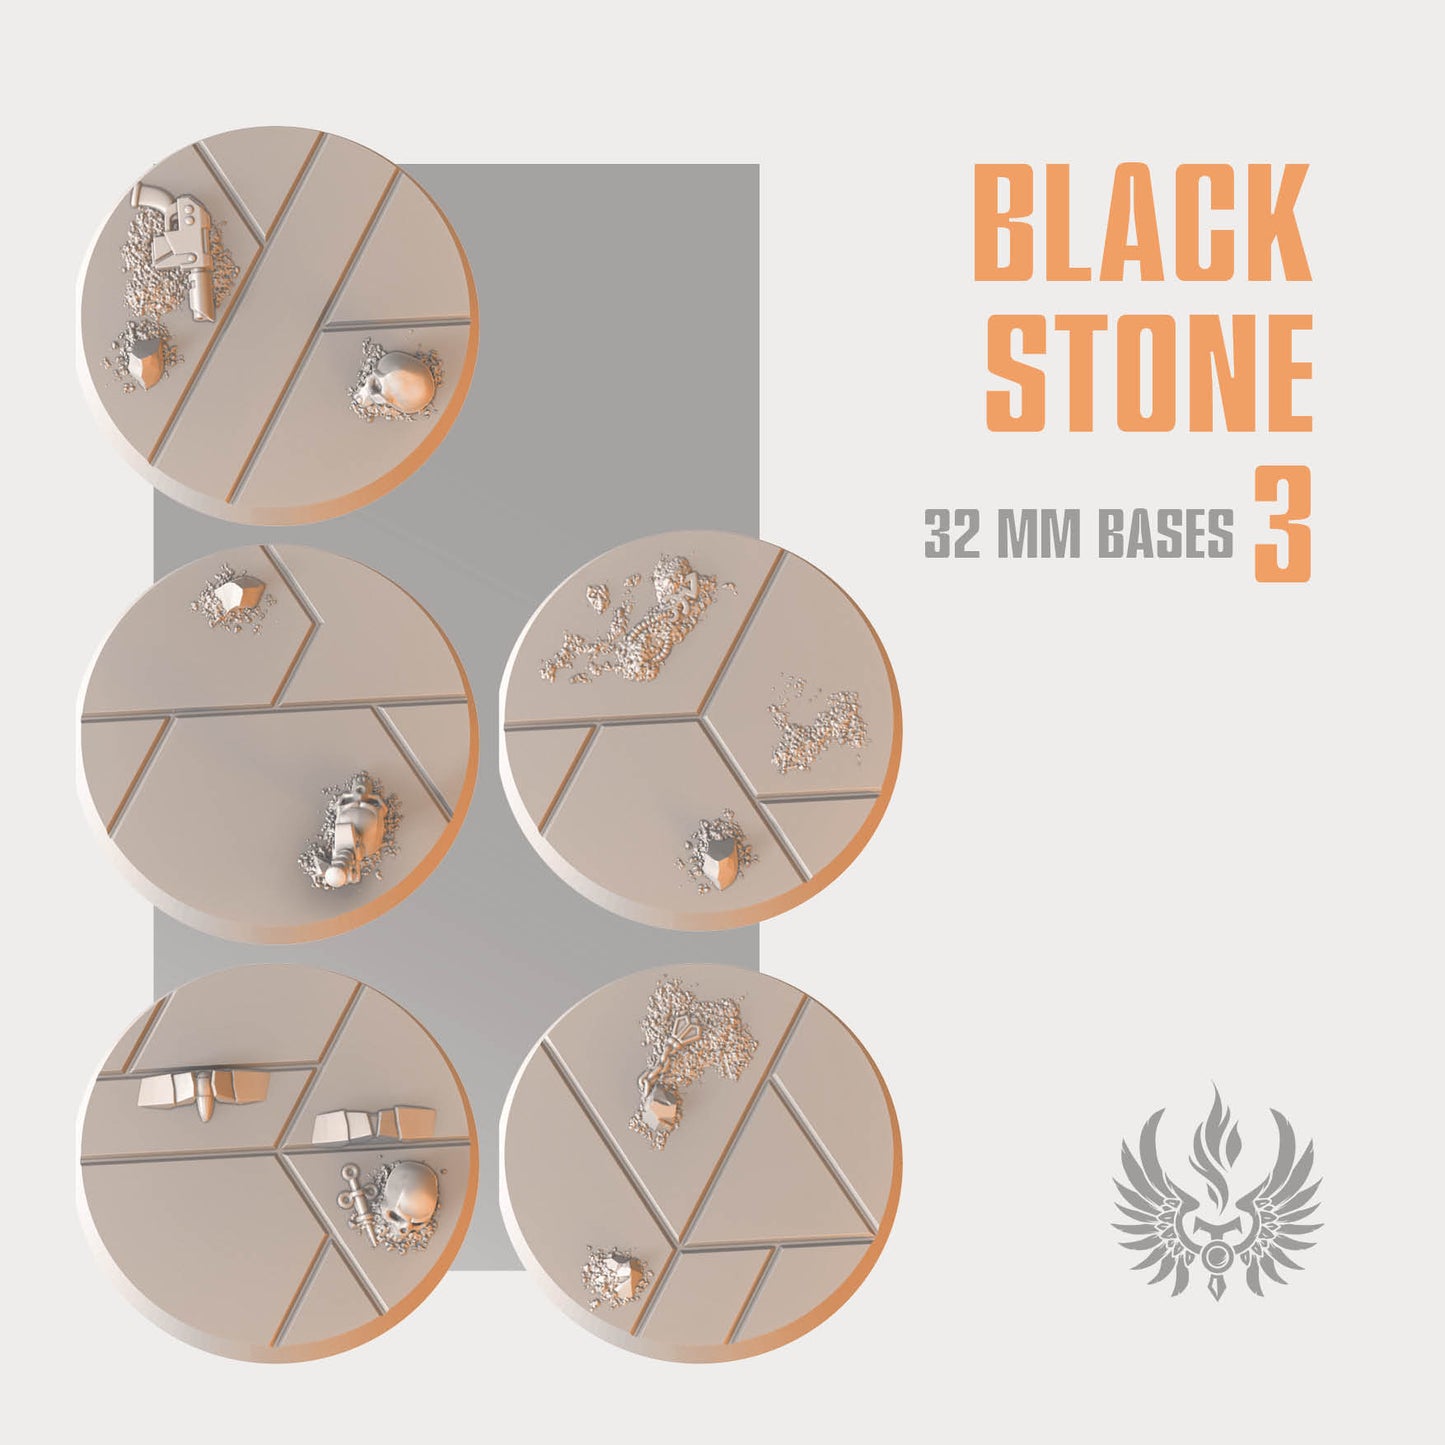 Black stone bases 32 mm, set 3